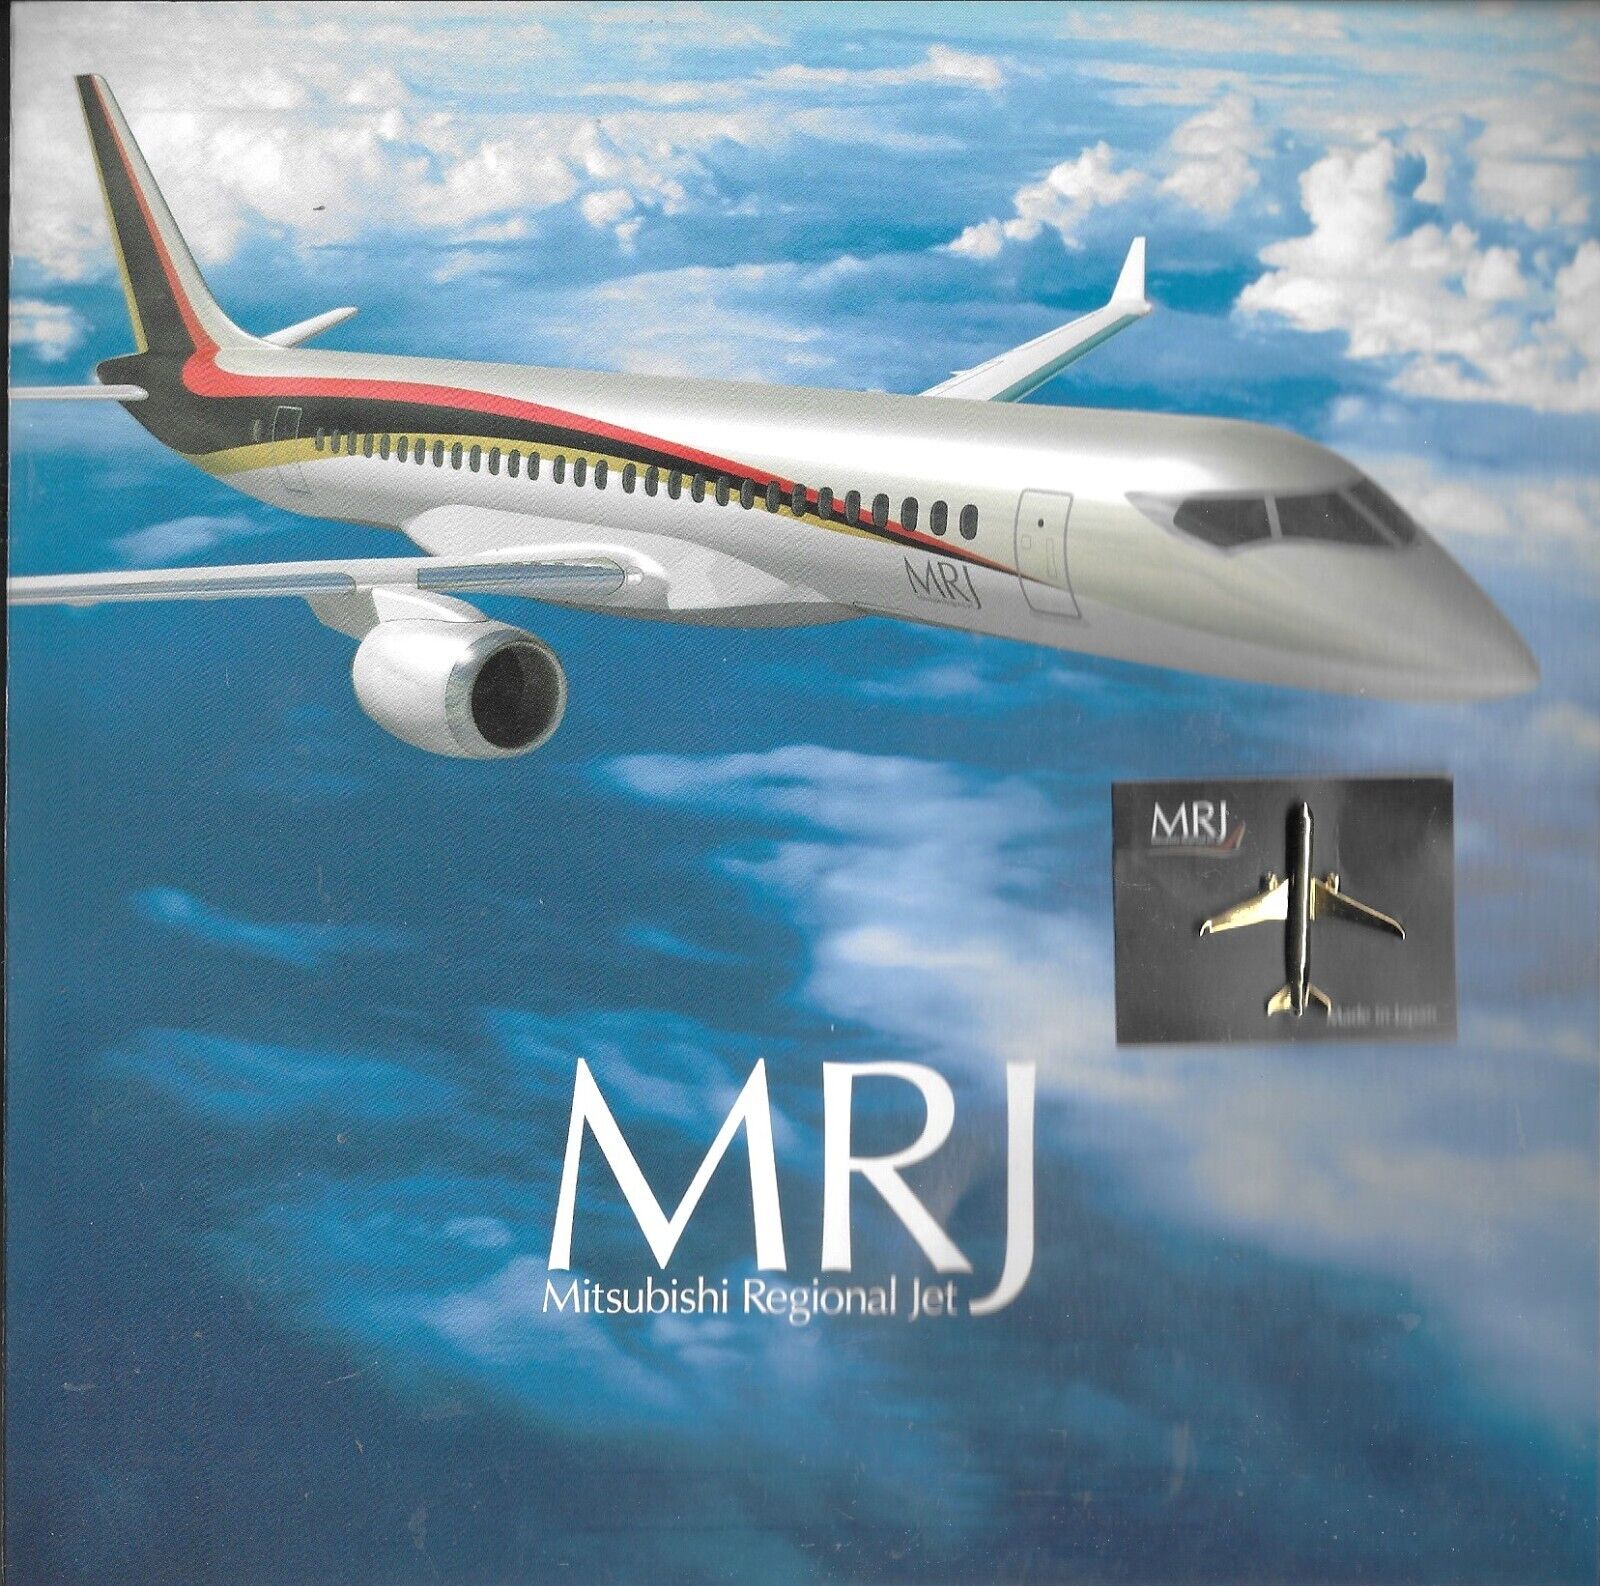 MRJ Mitsubishi Aircraft Brochure & MRJ Lapel Pin on card.